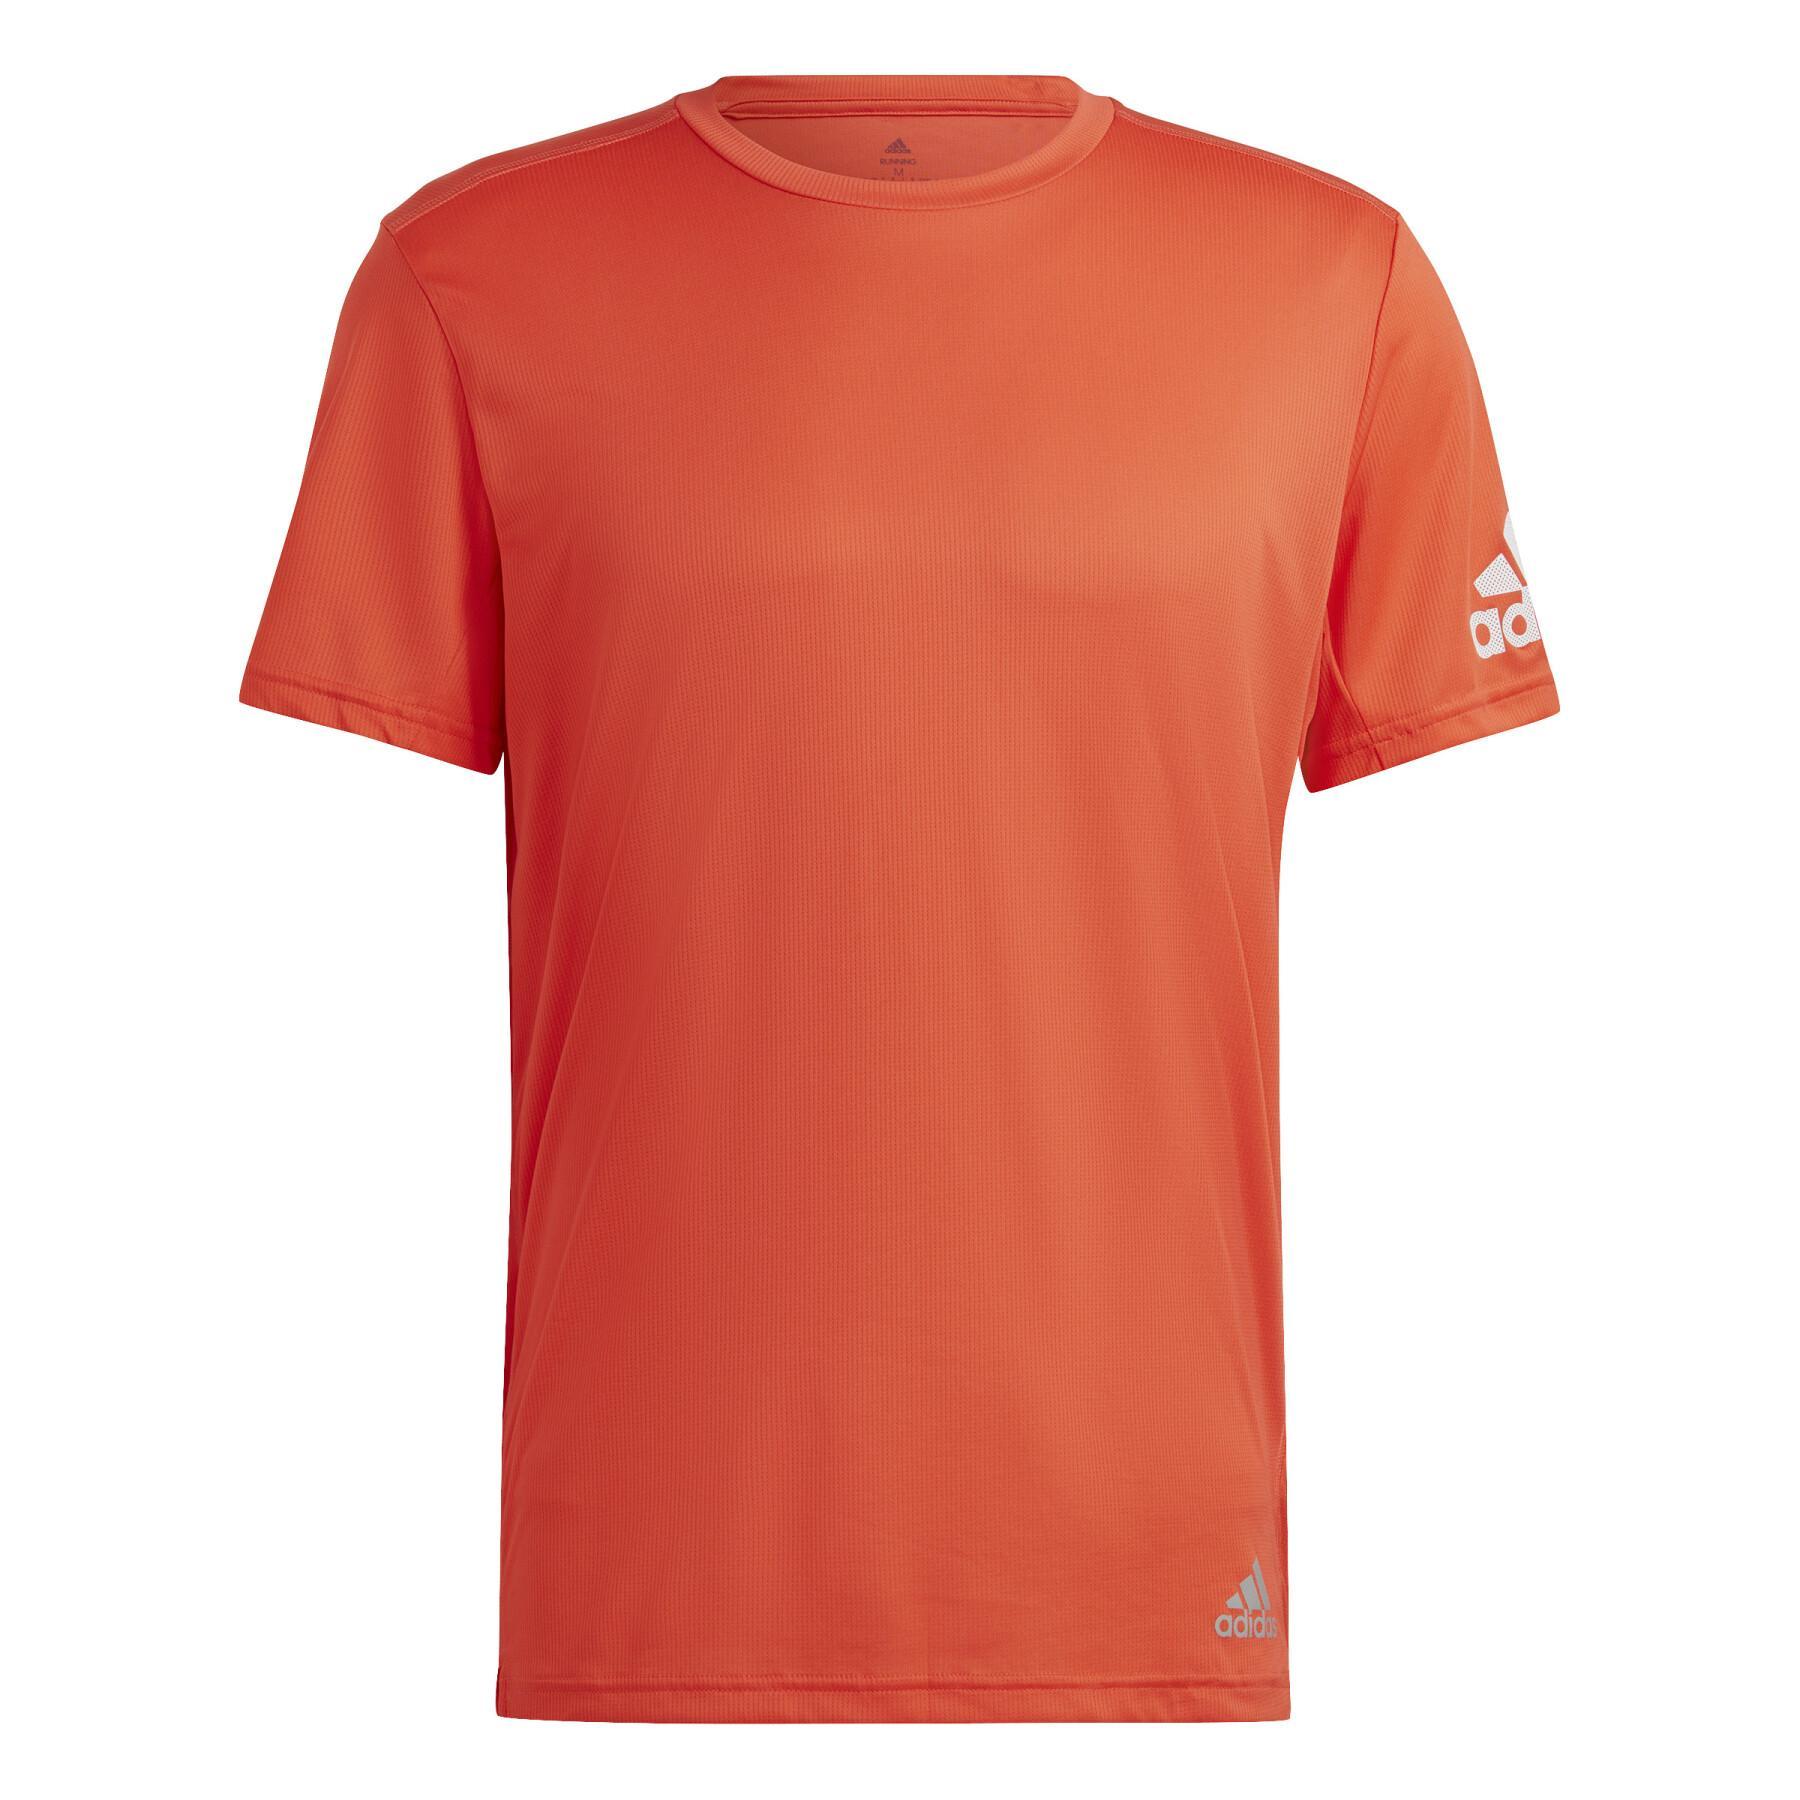 Camiseta Adidas Running Hombre IT Coral